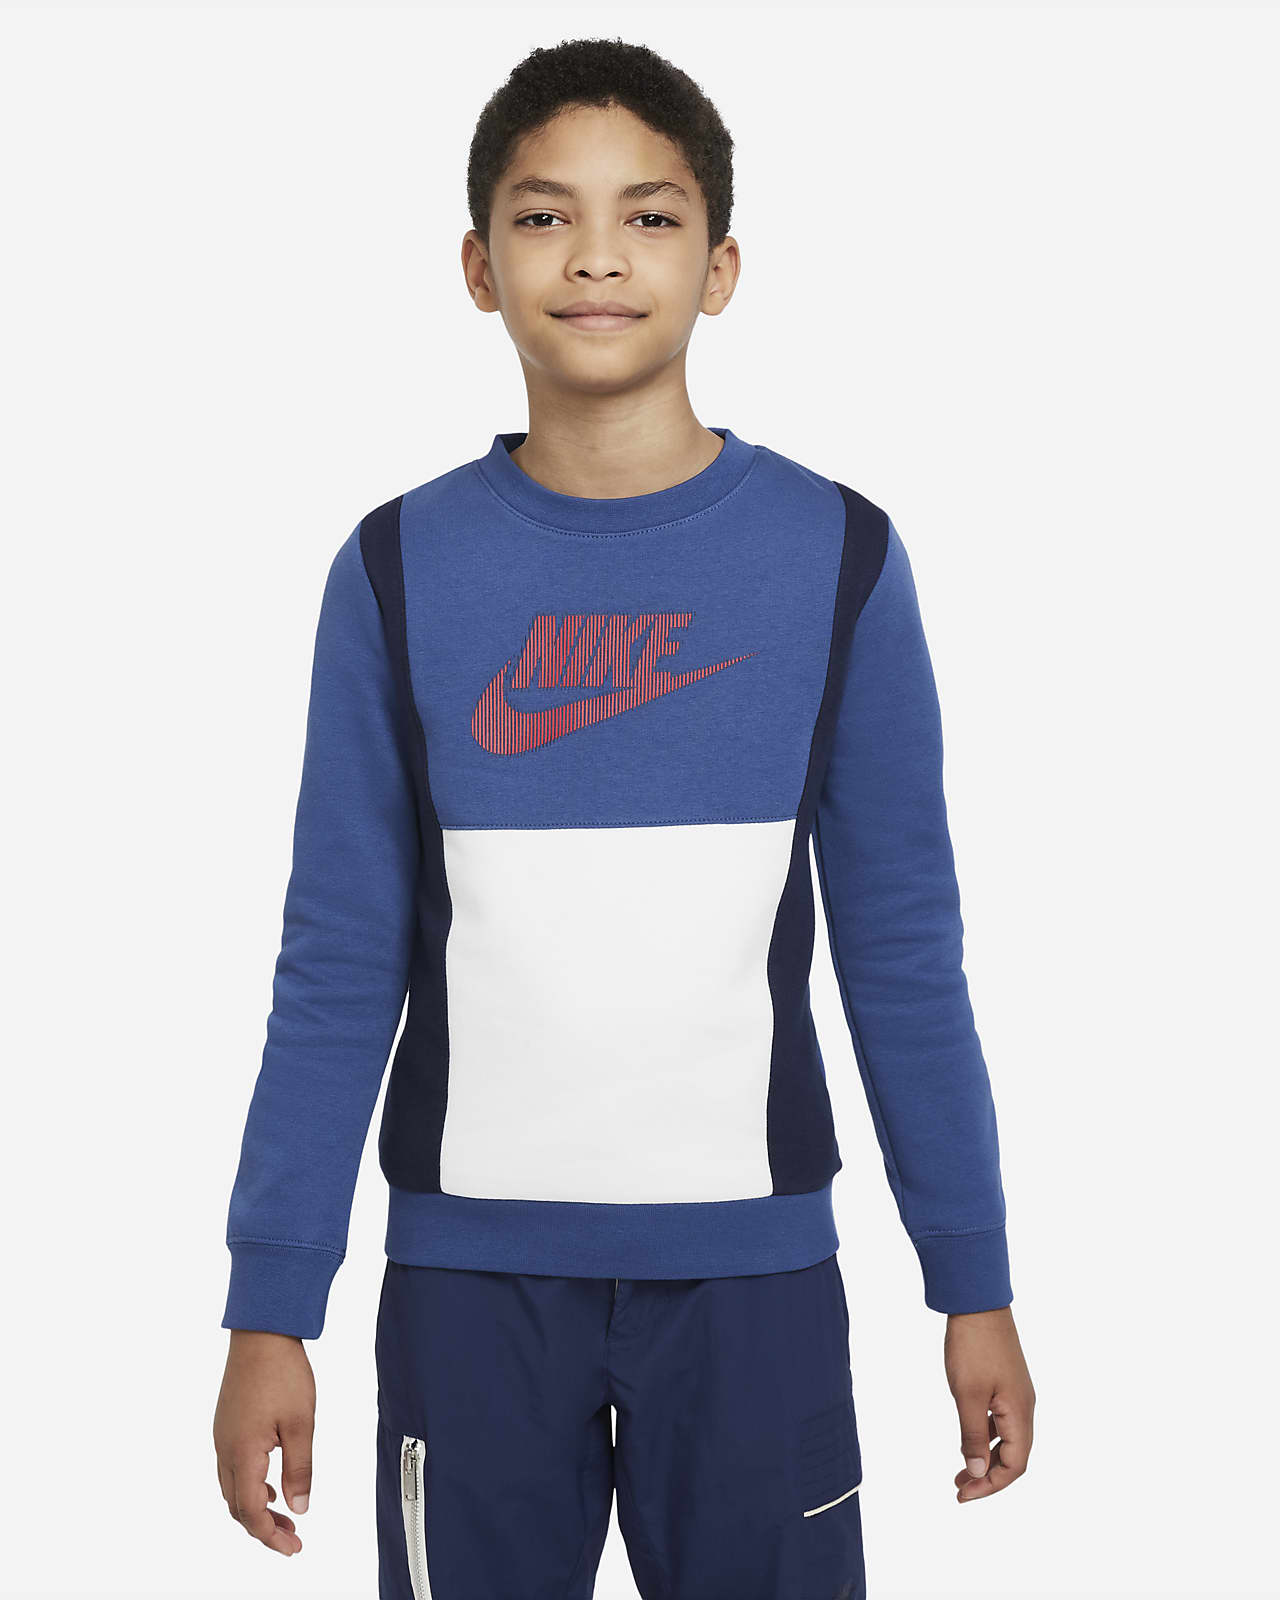 Nike Sportswear Fleece-Sweatshirt für ältere Kinder (Jungen)